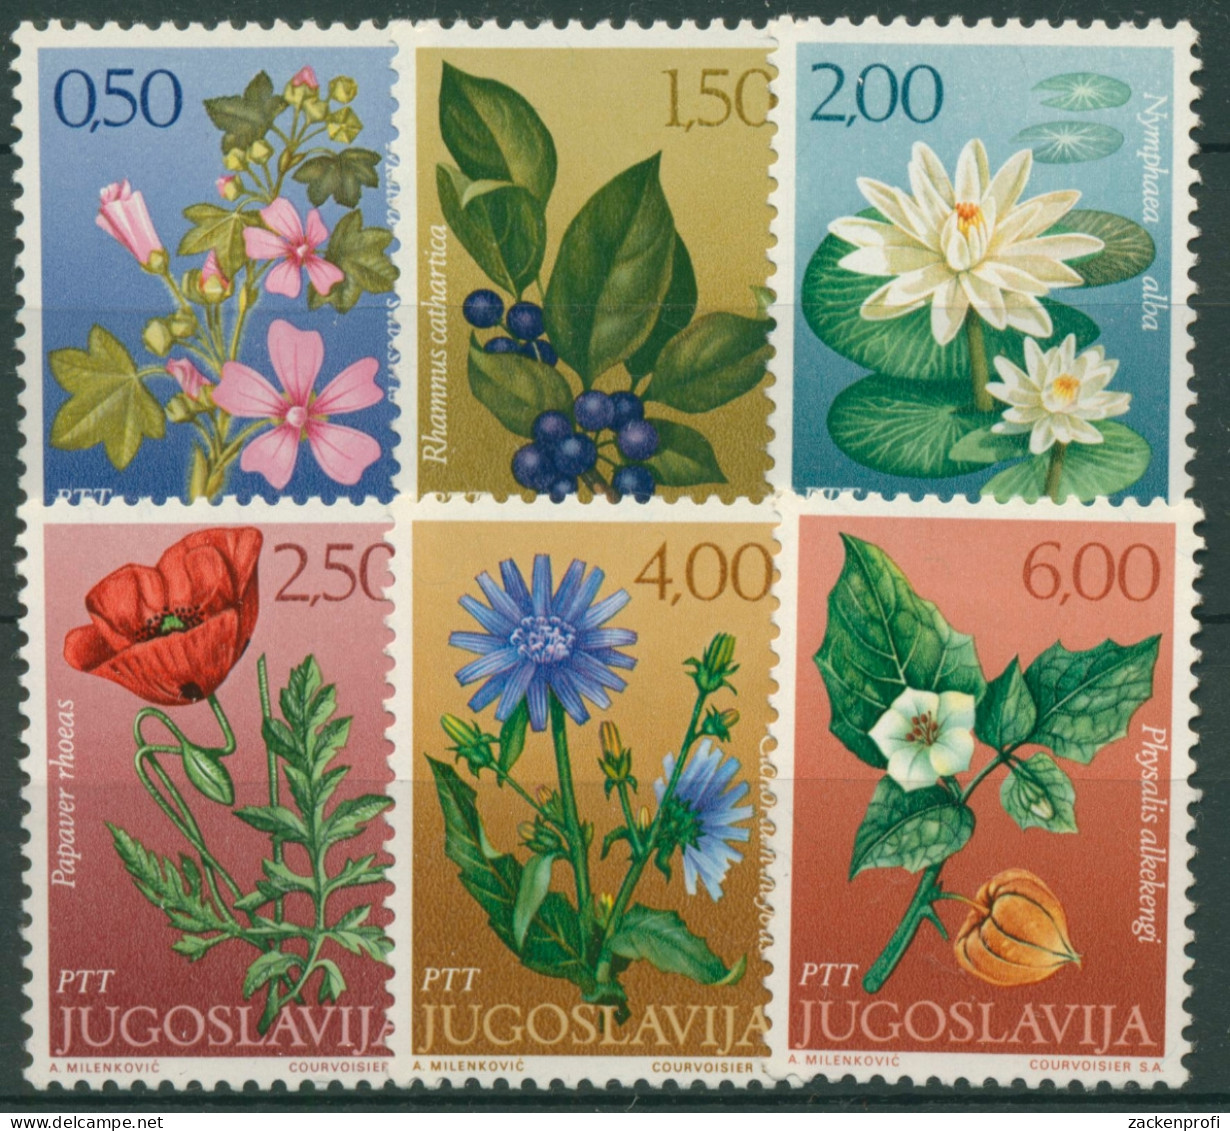 Jugoslawien 1971 Pflanzen Blumen Malve Wegwarte Seerose 1420/25 Postfrisch - Ongebruikt